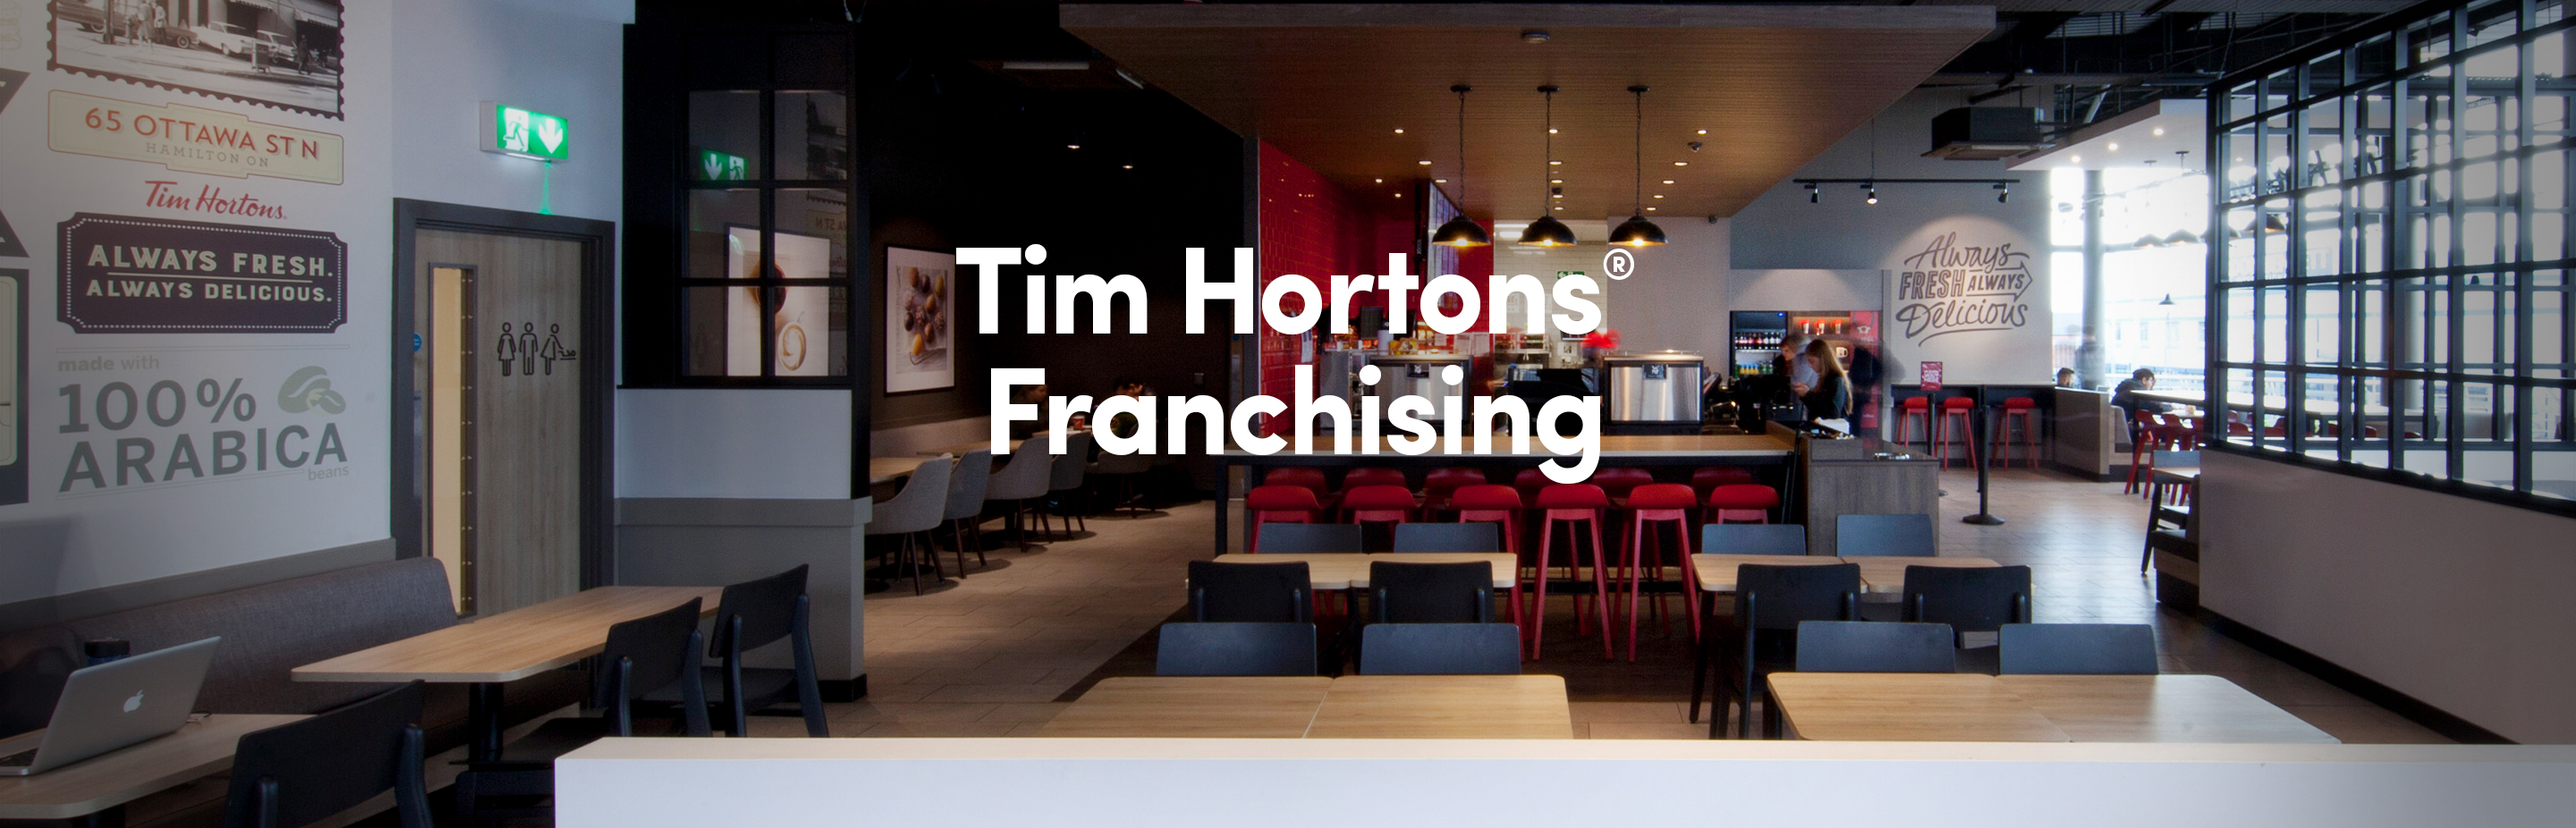 Tim Hortons Franchising